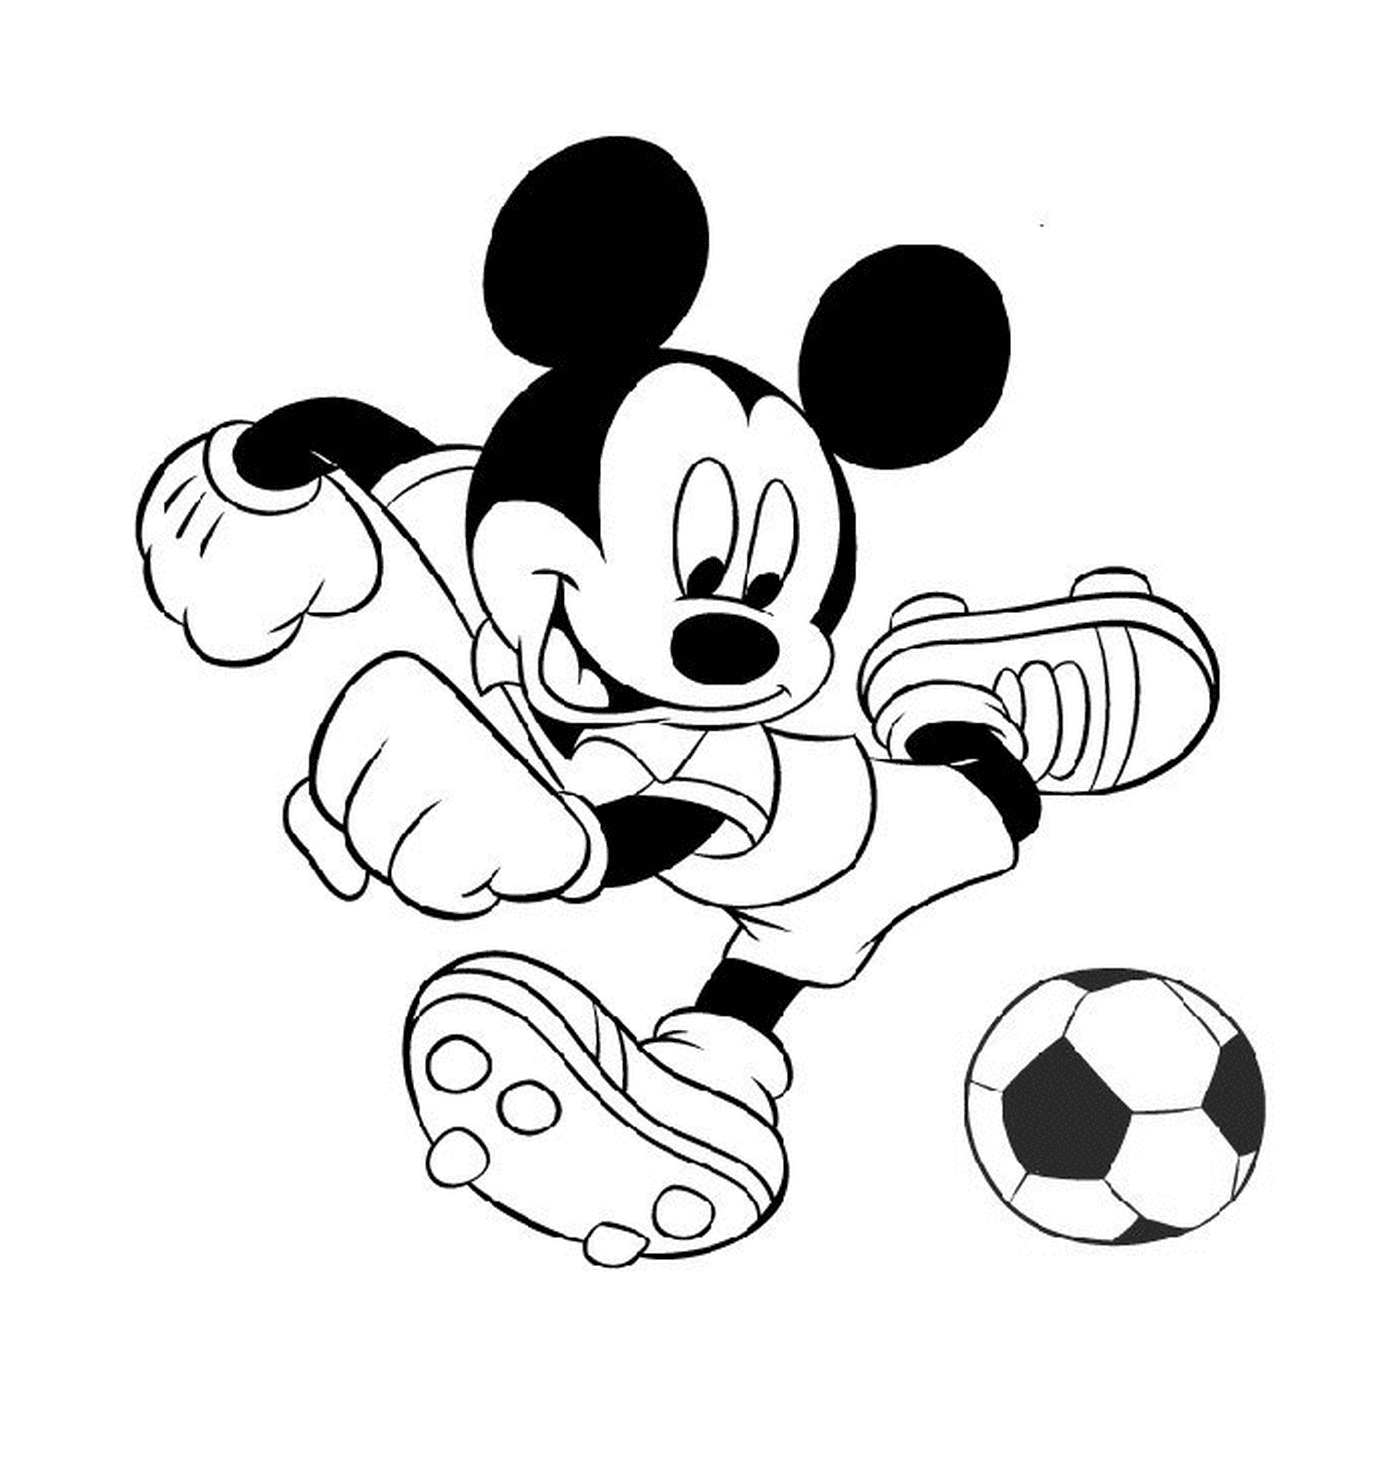  Mickey joga futebol: chutando uma bola de futebol 